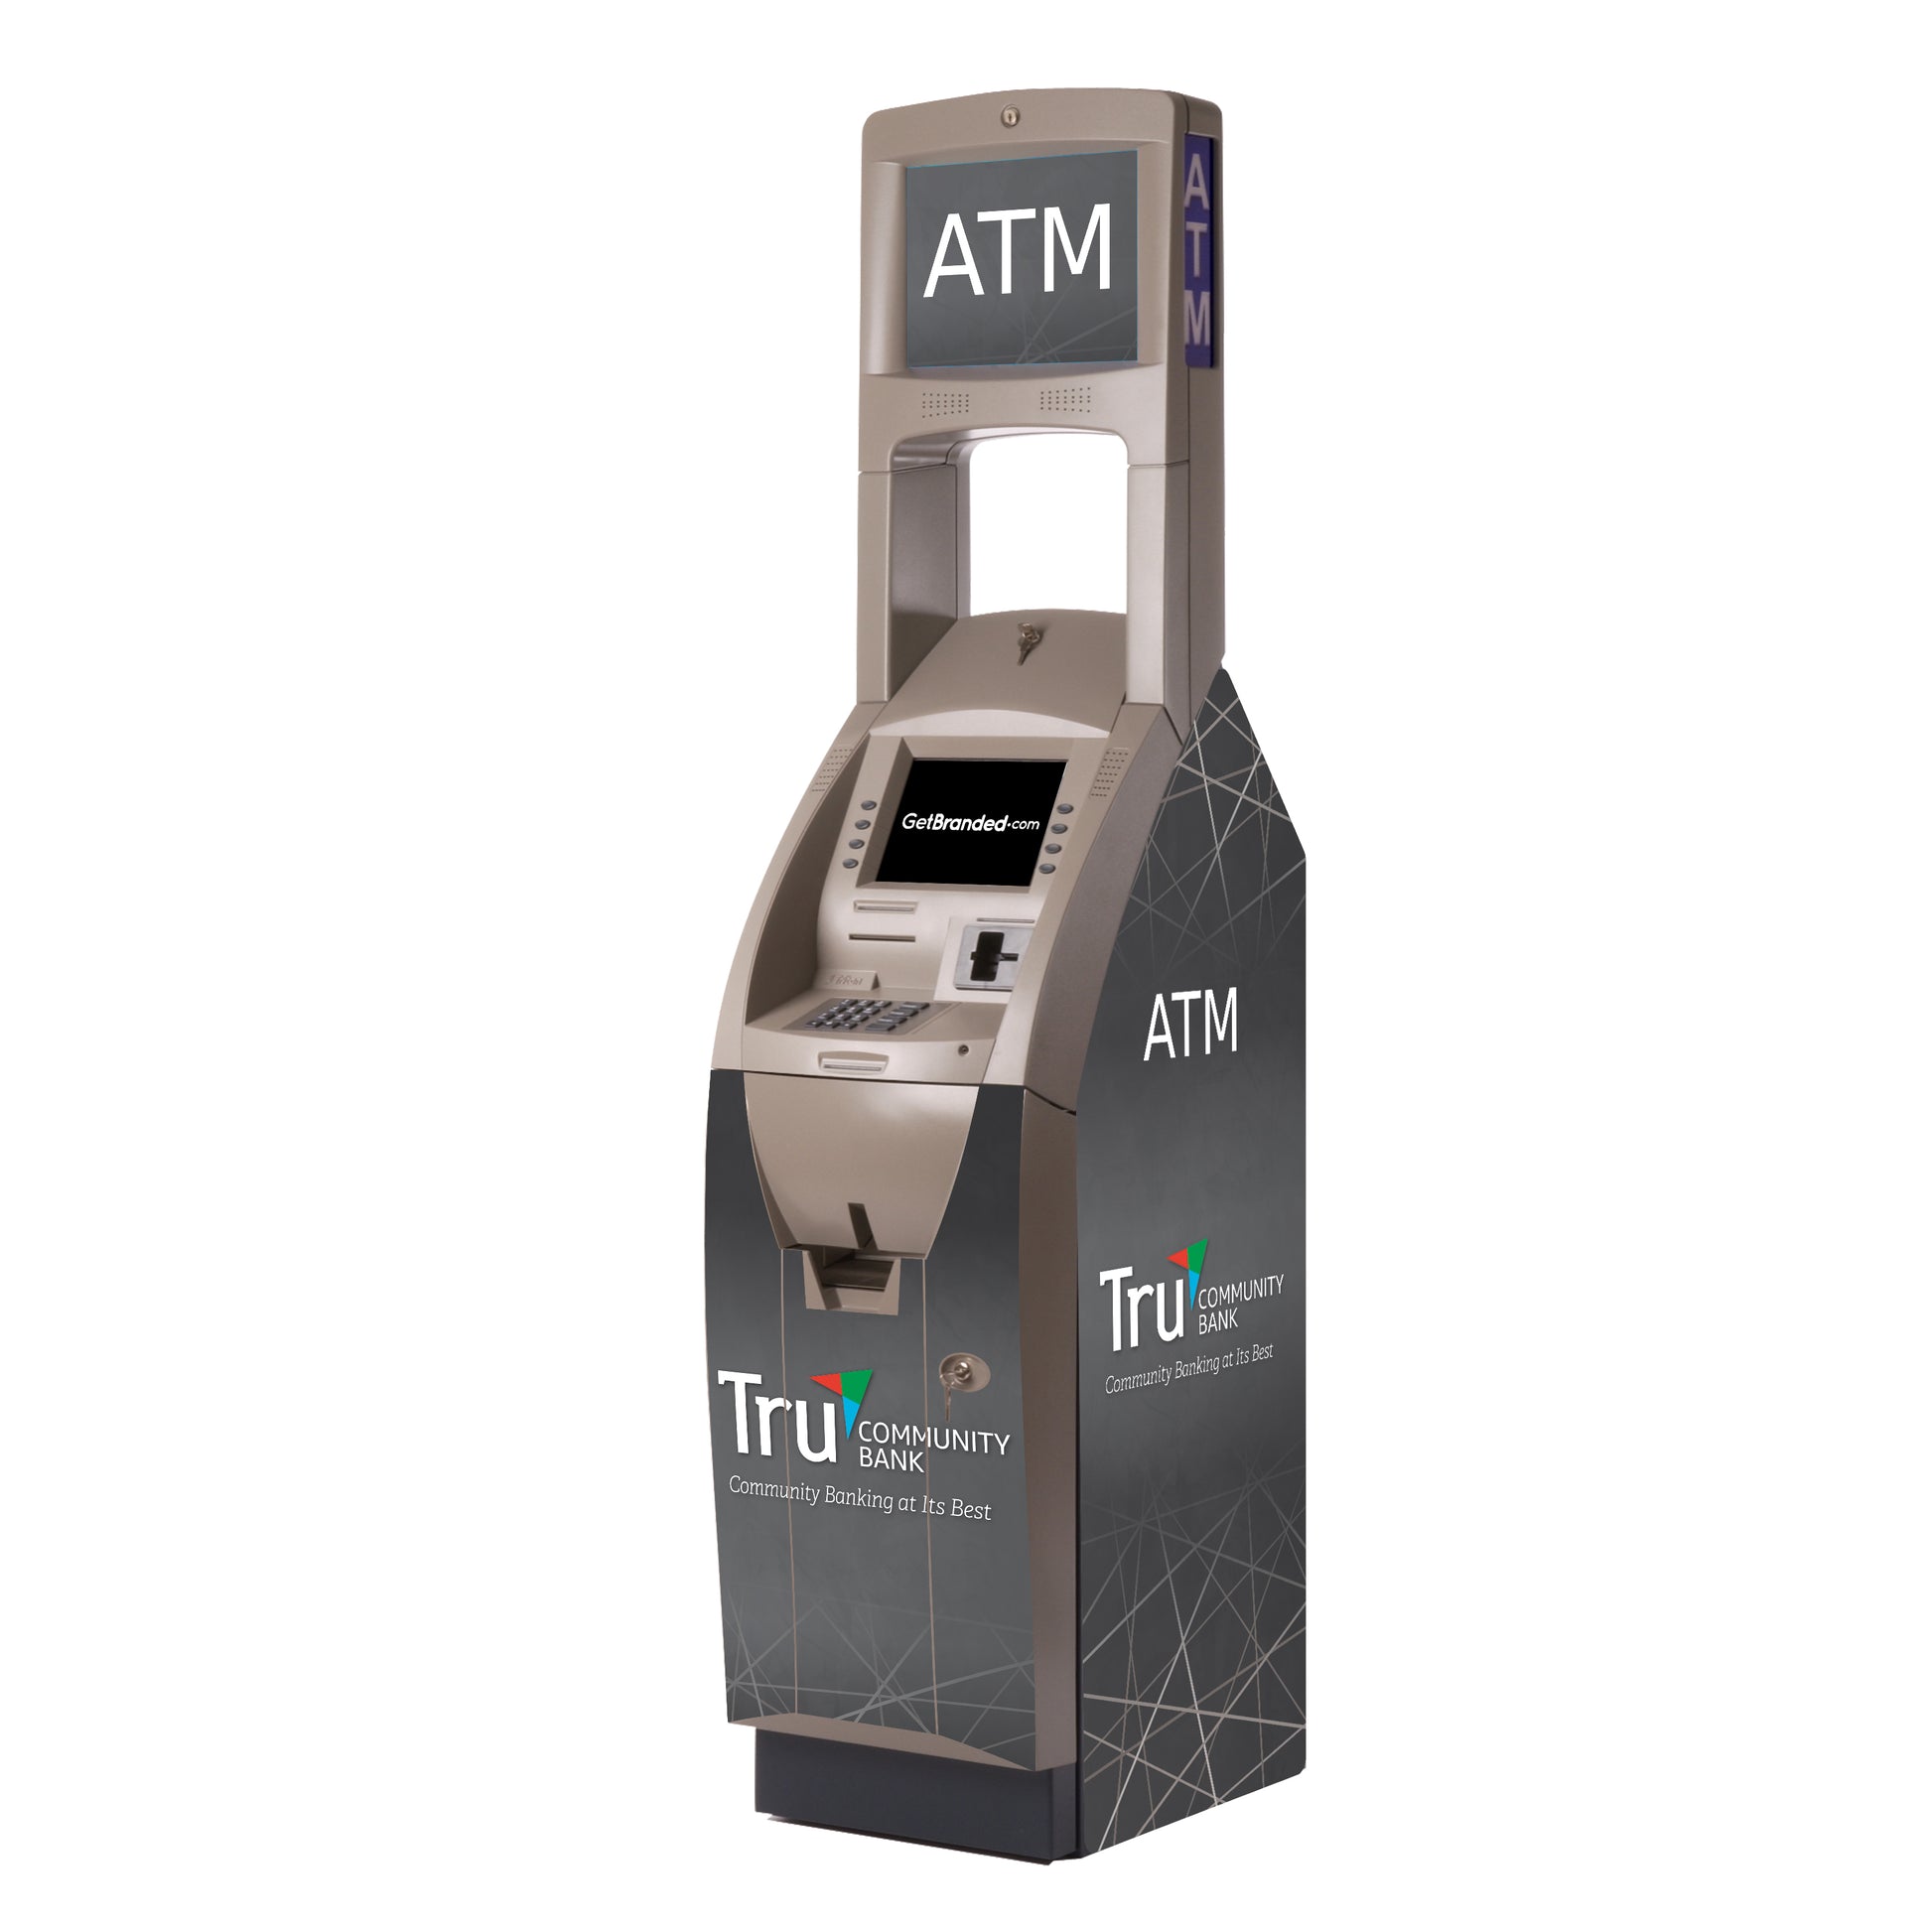 Triton RL5000 ATM Wrap Rendering.